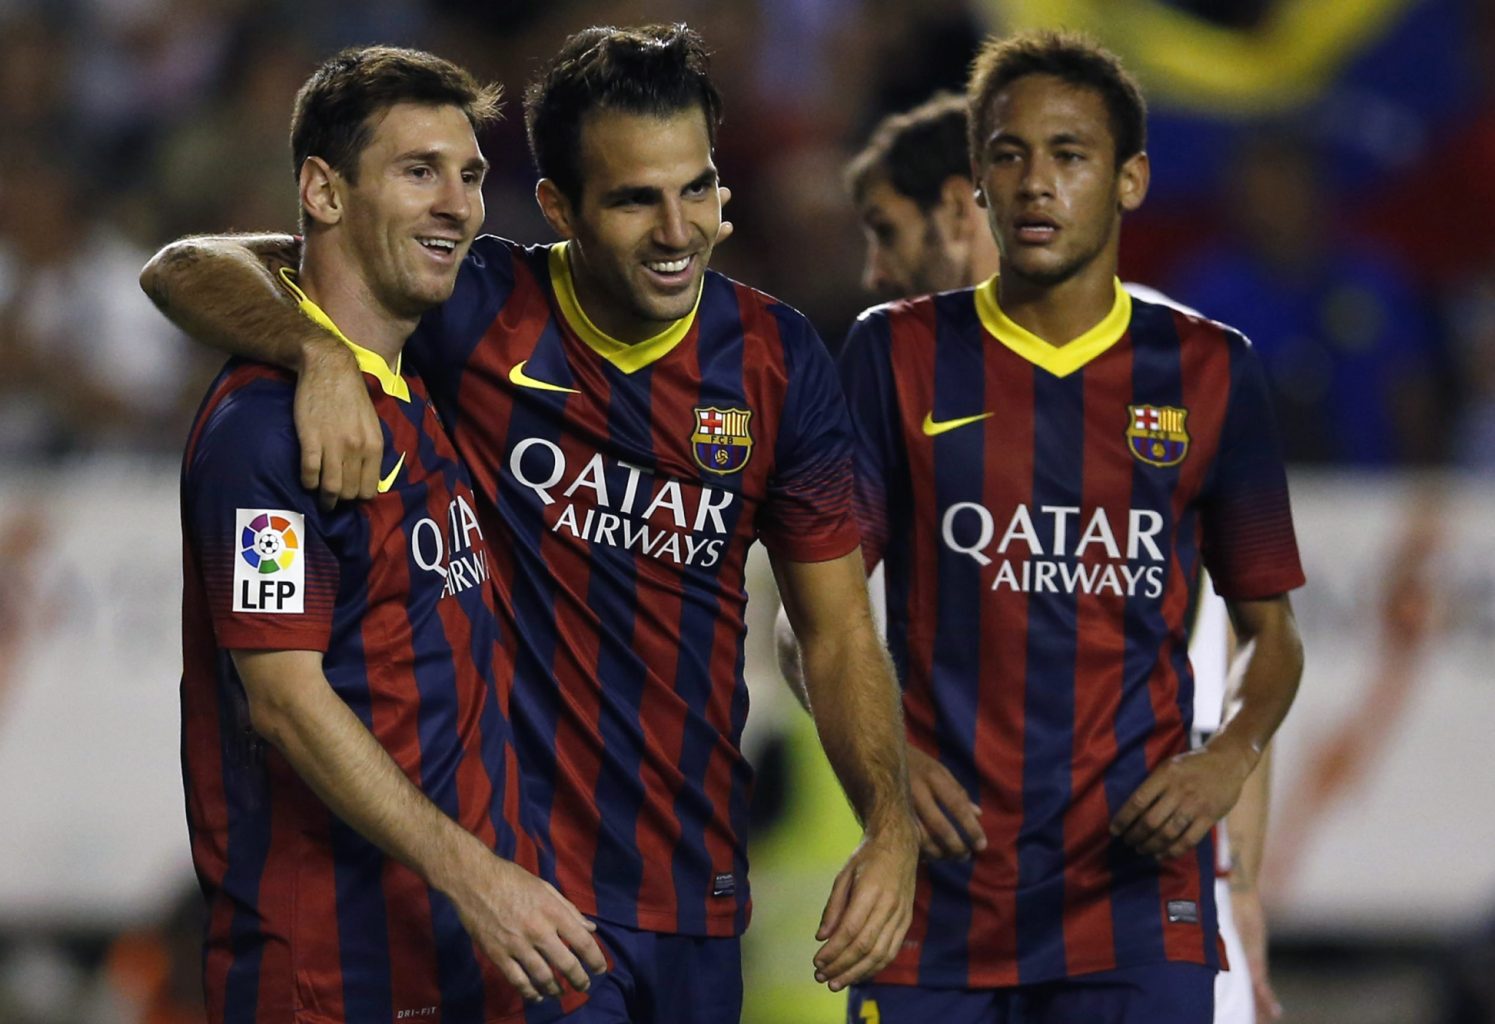 lionel messi fabregas and neymar celebrating barcelona goal vs rayo vallecano